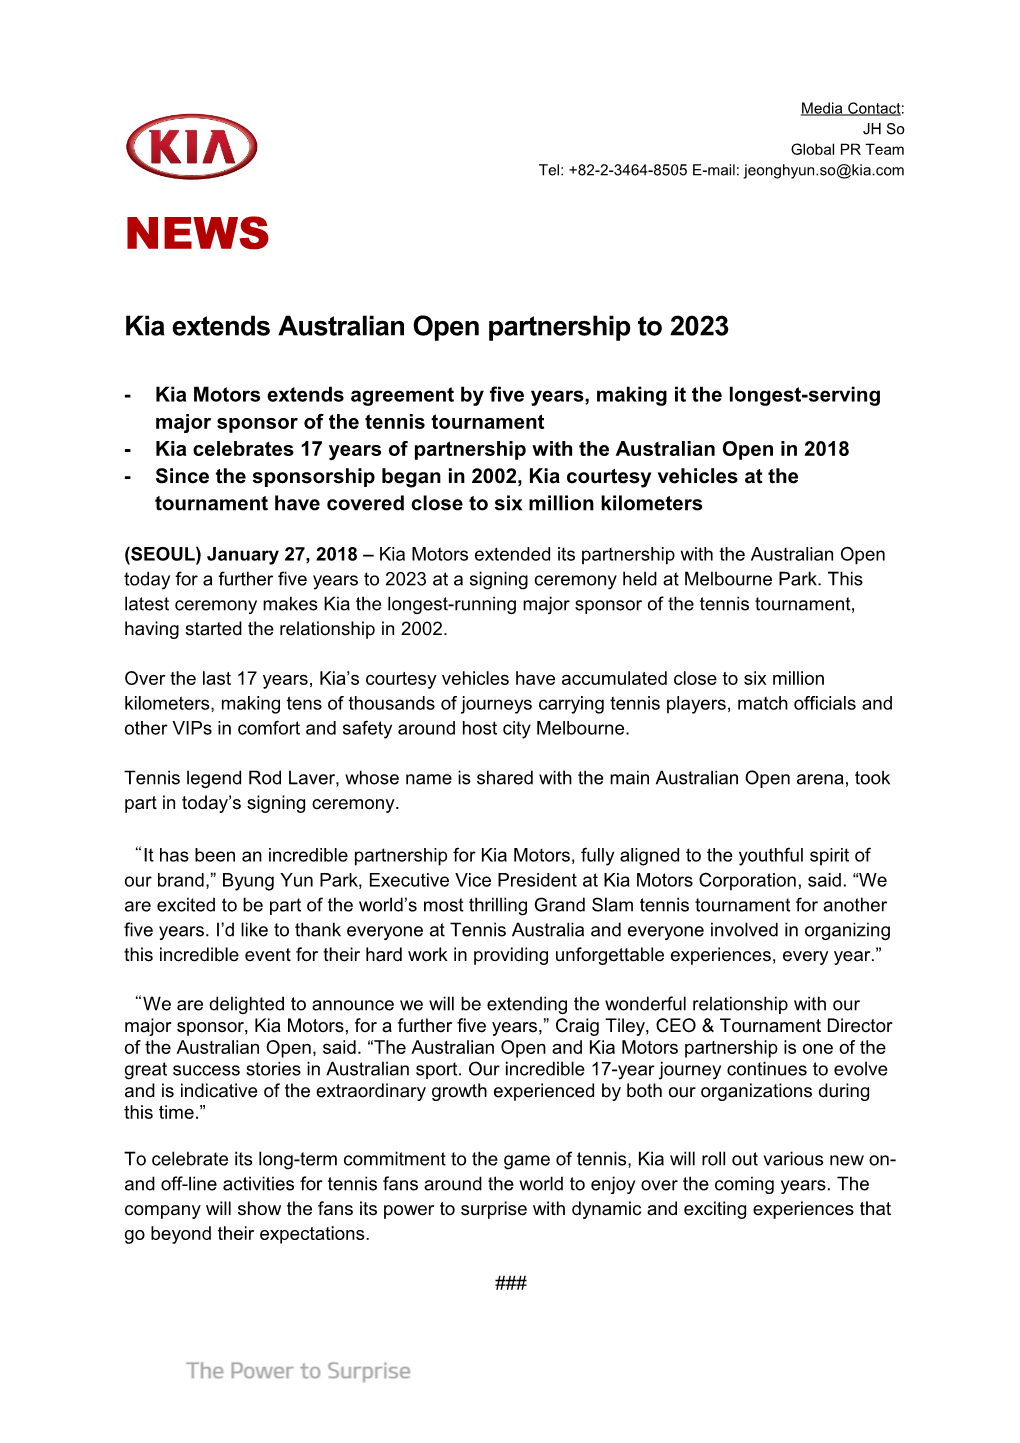 Kia Extends Australian Open Partnership to 2023